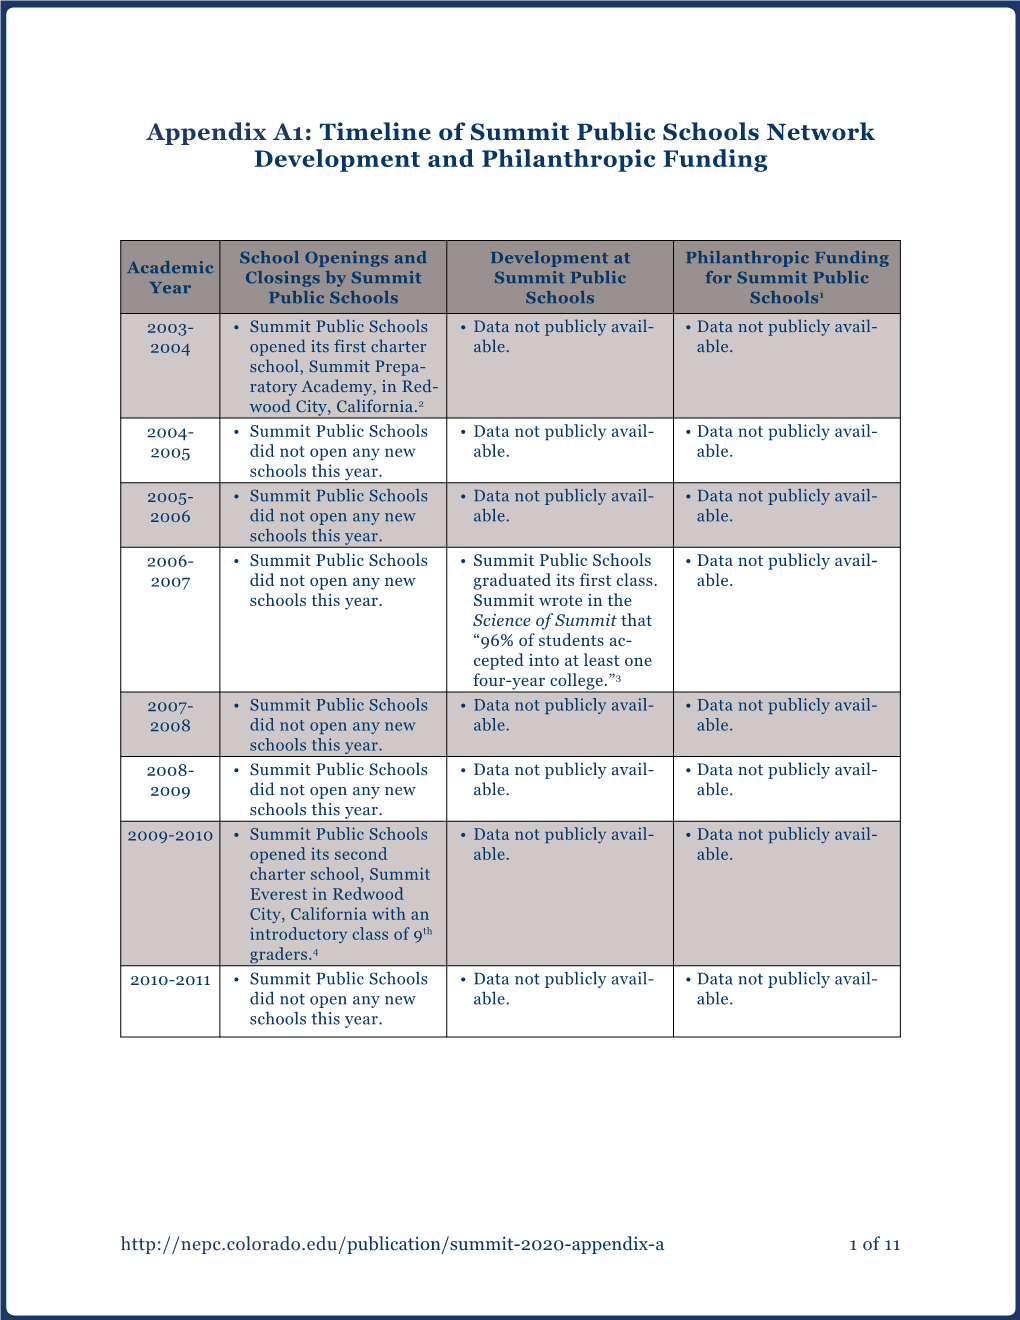 Appendix A1: Timeline of Summit Public Schools Network Development and Philanthropic Funding